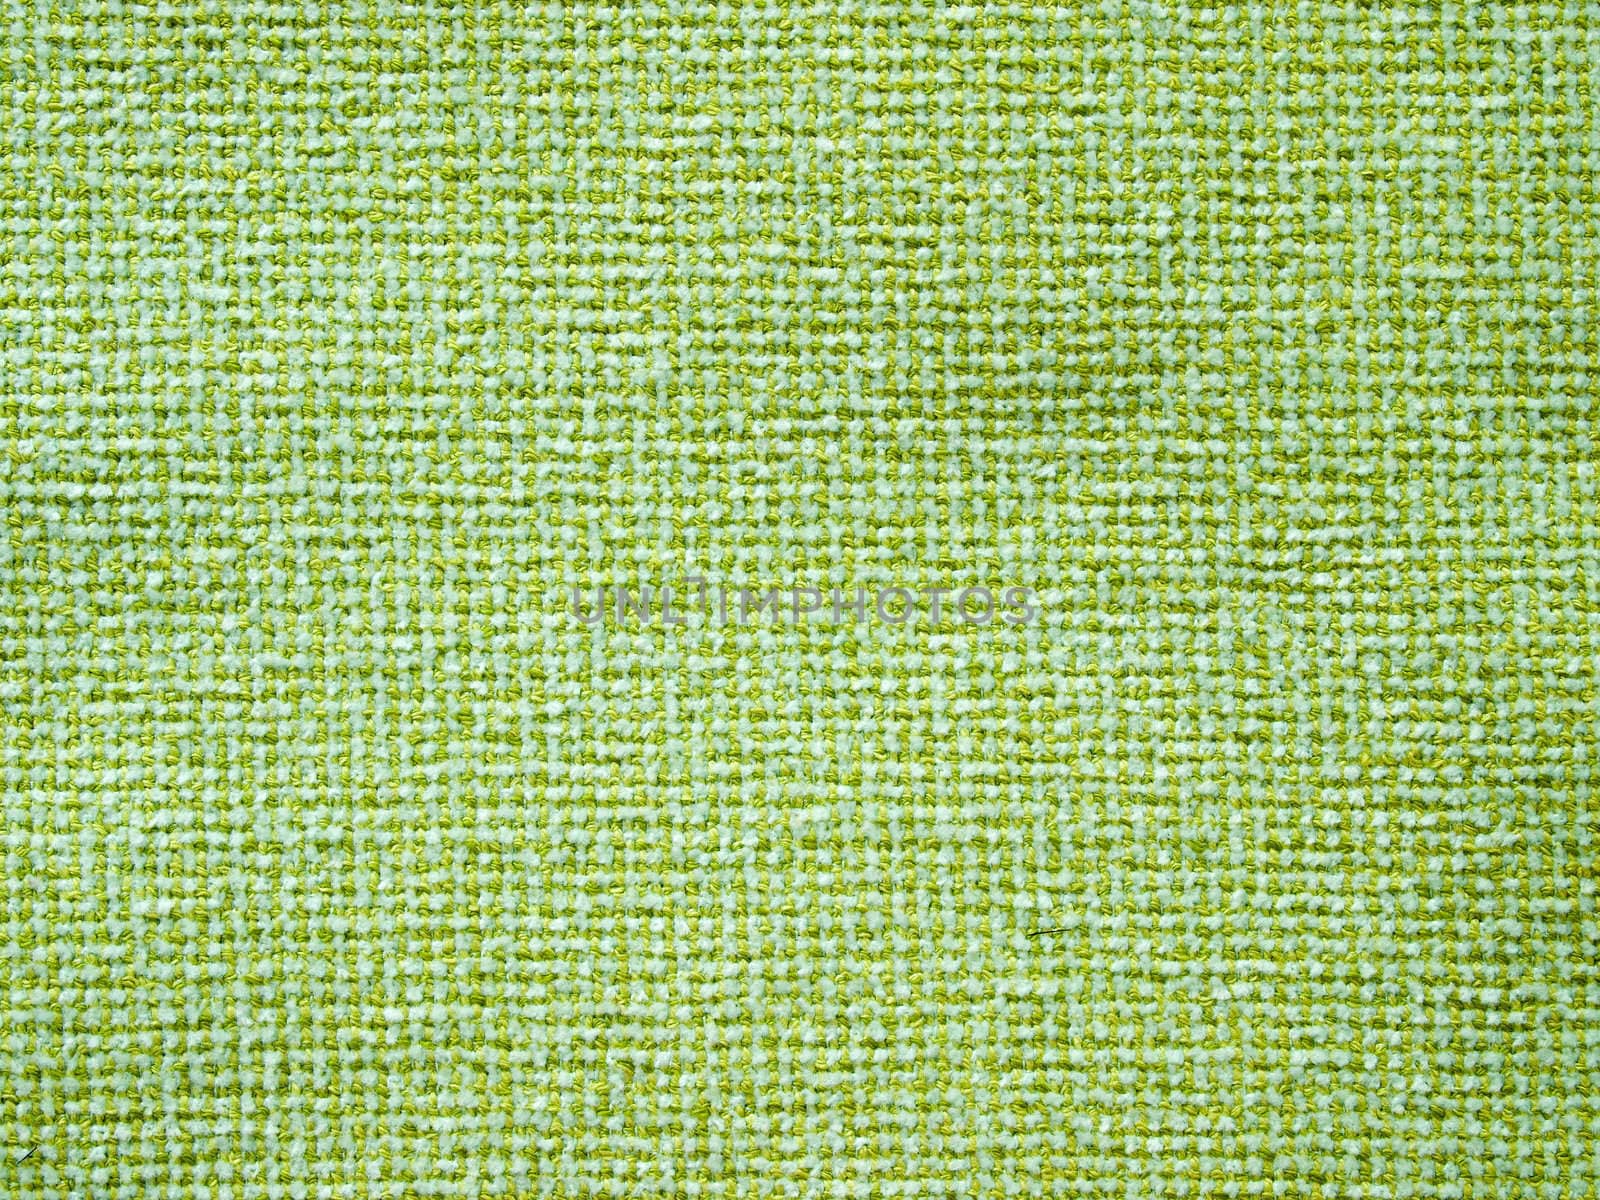 Texture of Light green fabric for interior design